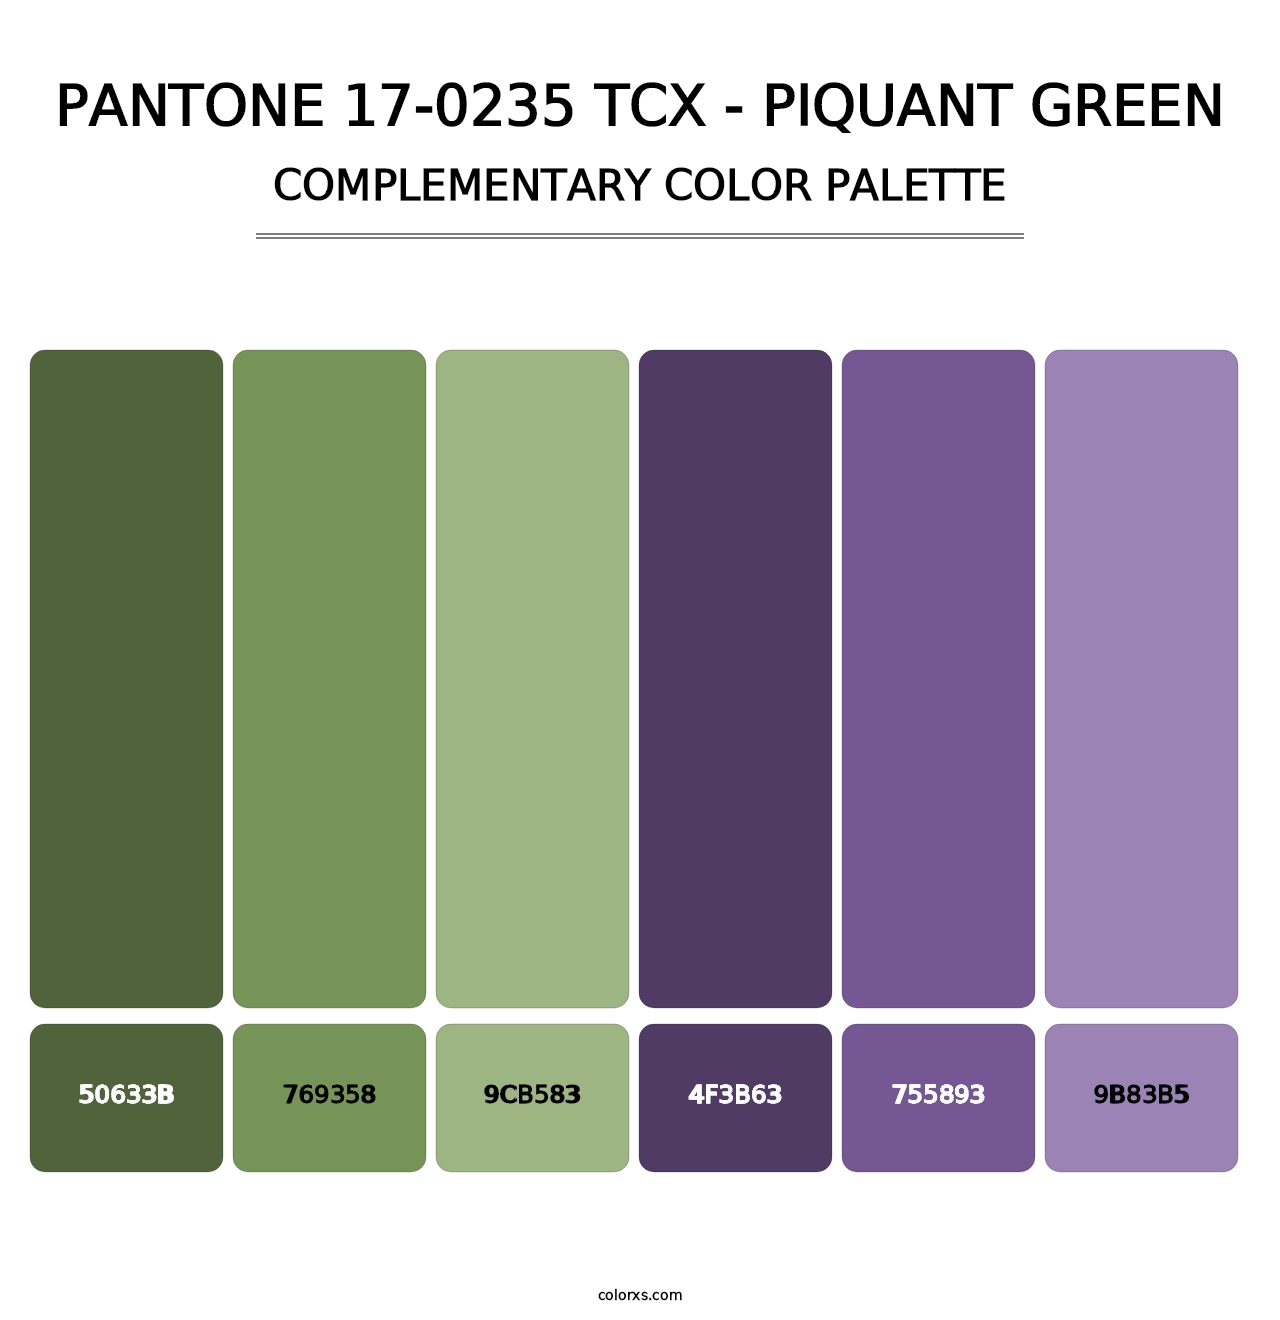 PANTONE 17-0235 TCX - Piquant Green - Complementary Color Palette